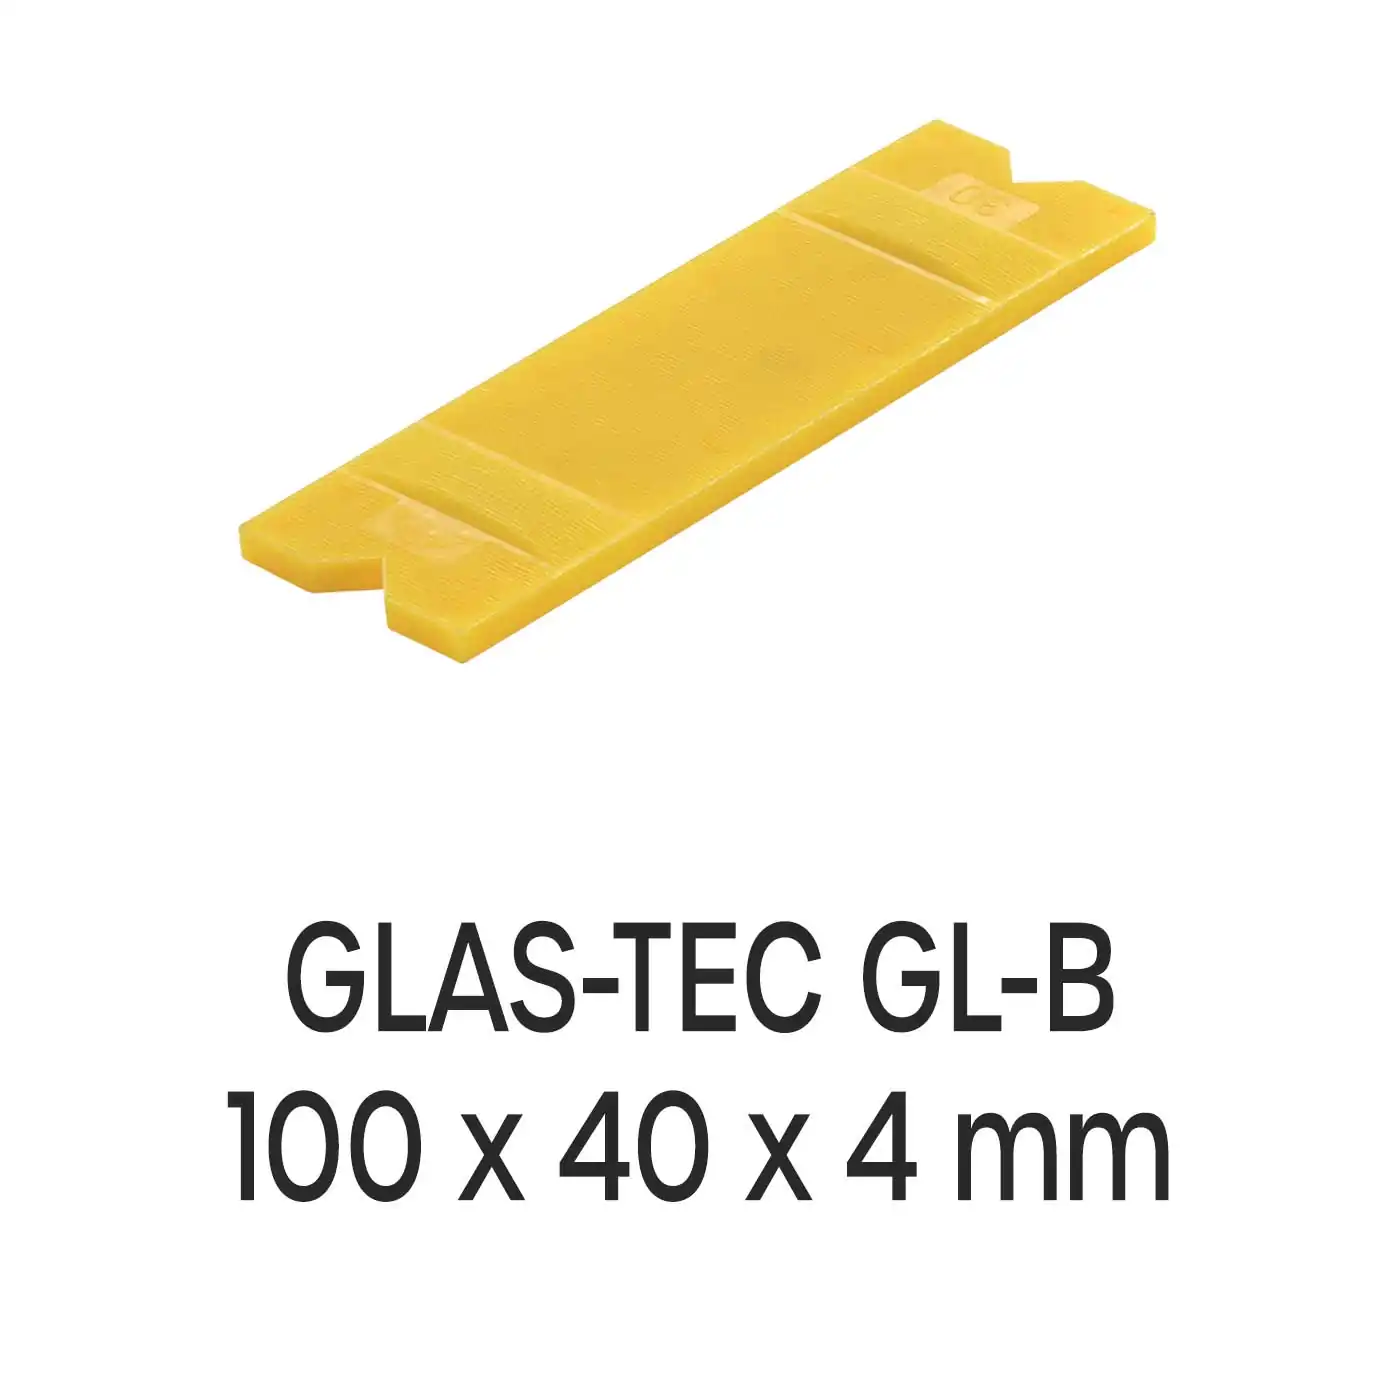 Roto GLAS-TEC GL-B 100 x 40 x 4 mm Verglasungsklötze 500 Stück